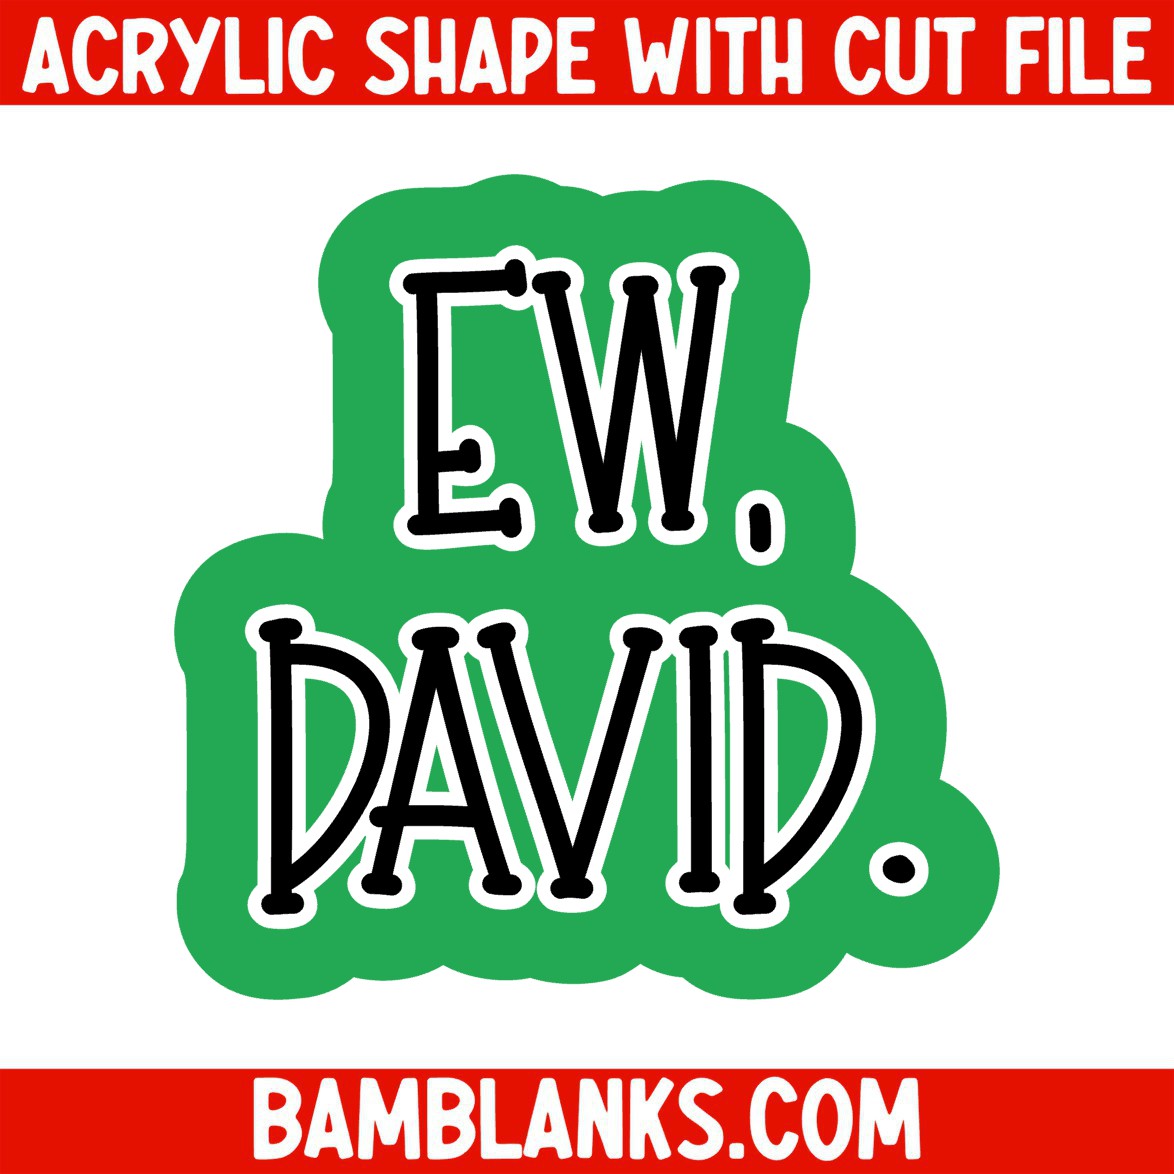 Ew David - Acrylic Shape #1278